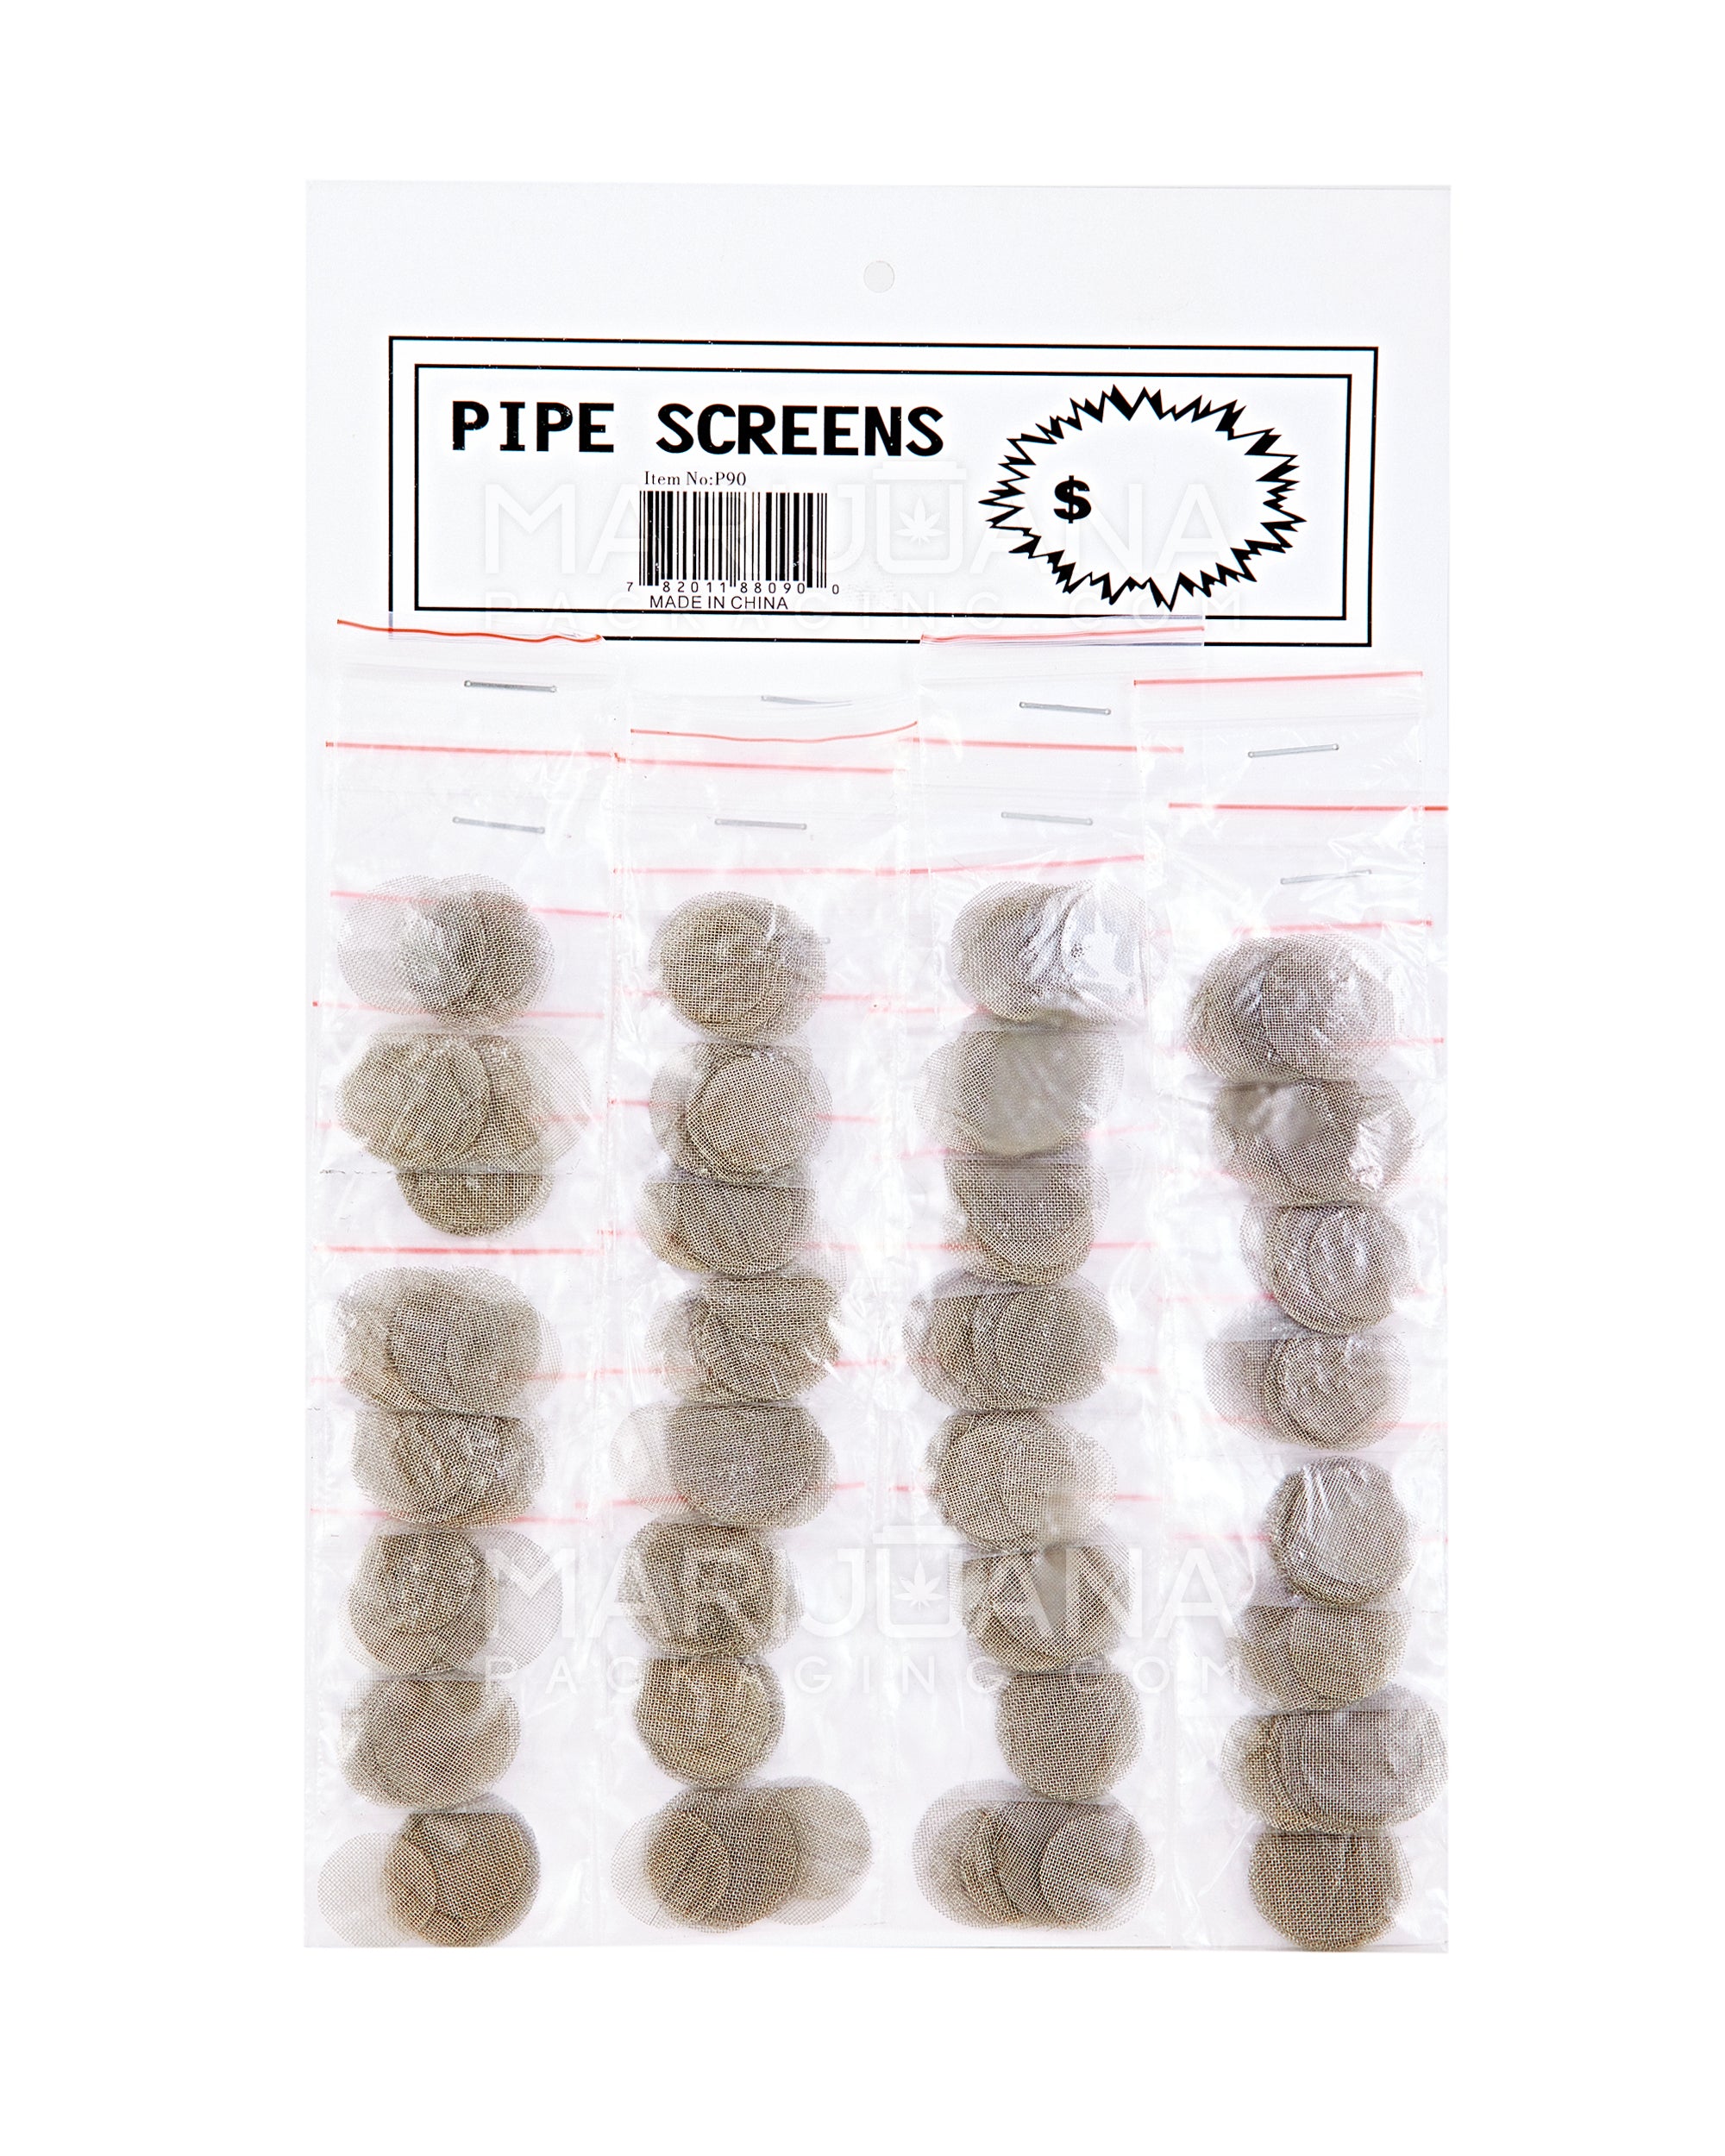 Assorted Metal Pipe Screens - 32 Packs - 1